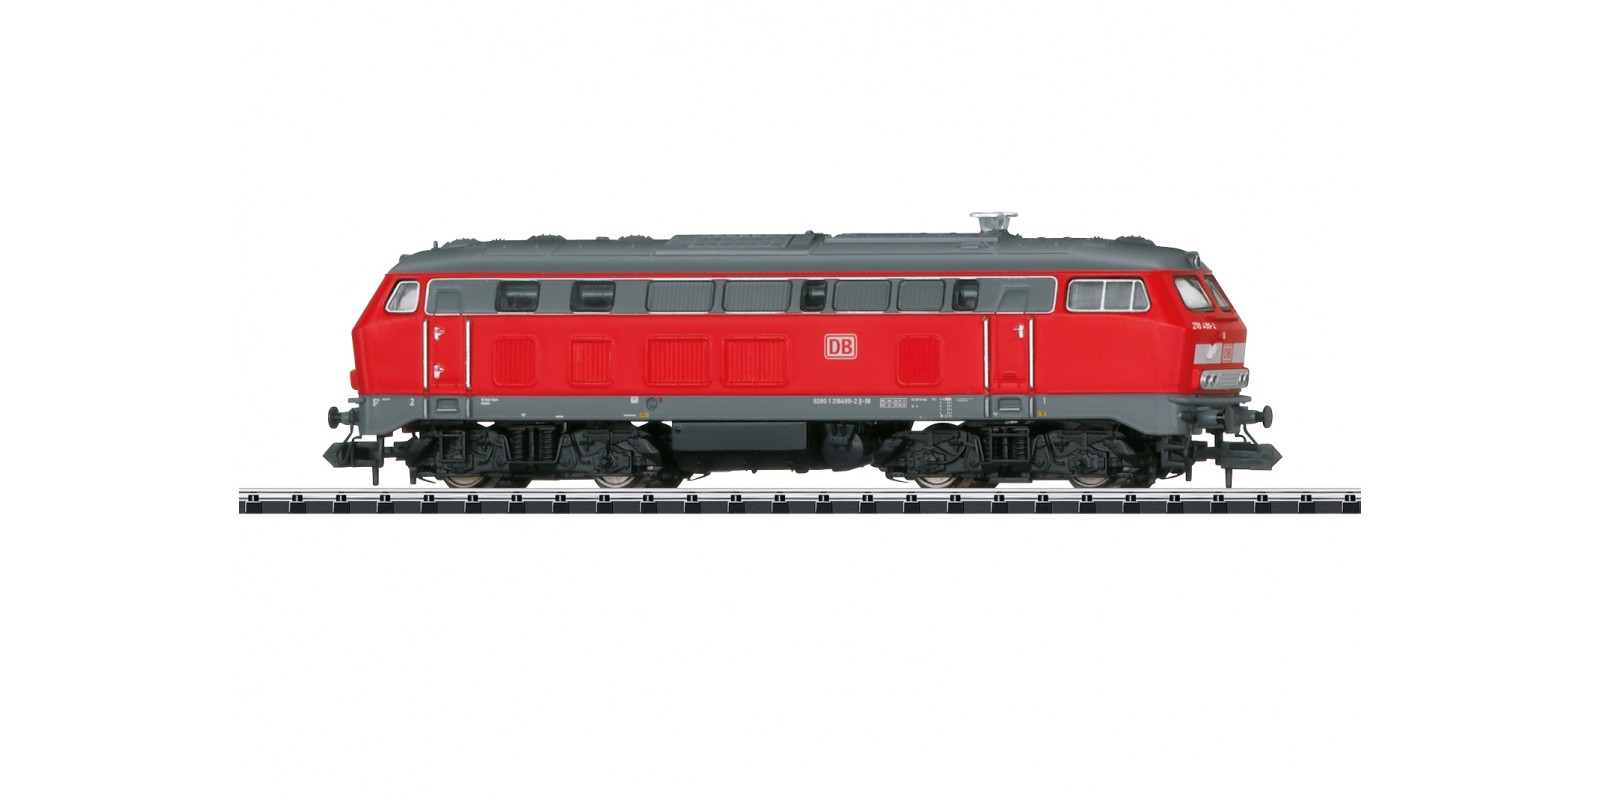 T16823 Class 218 Diesel Locomotive